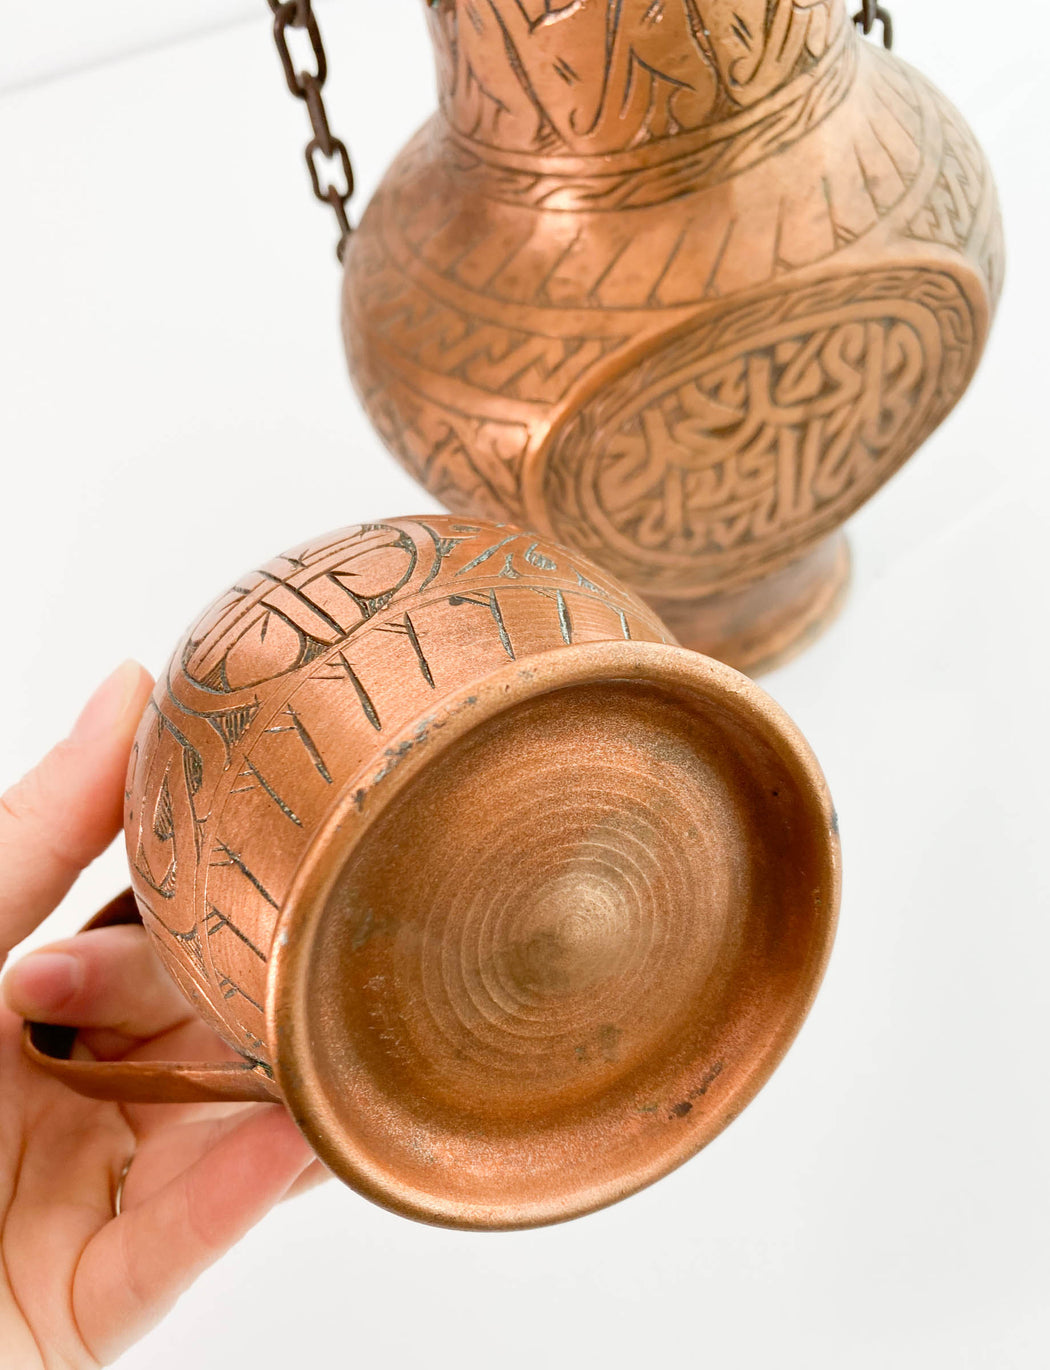 Antique Copper Pitcher and Mug